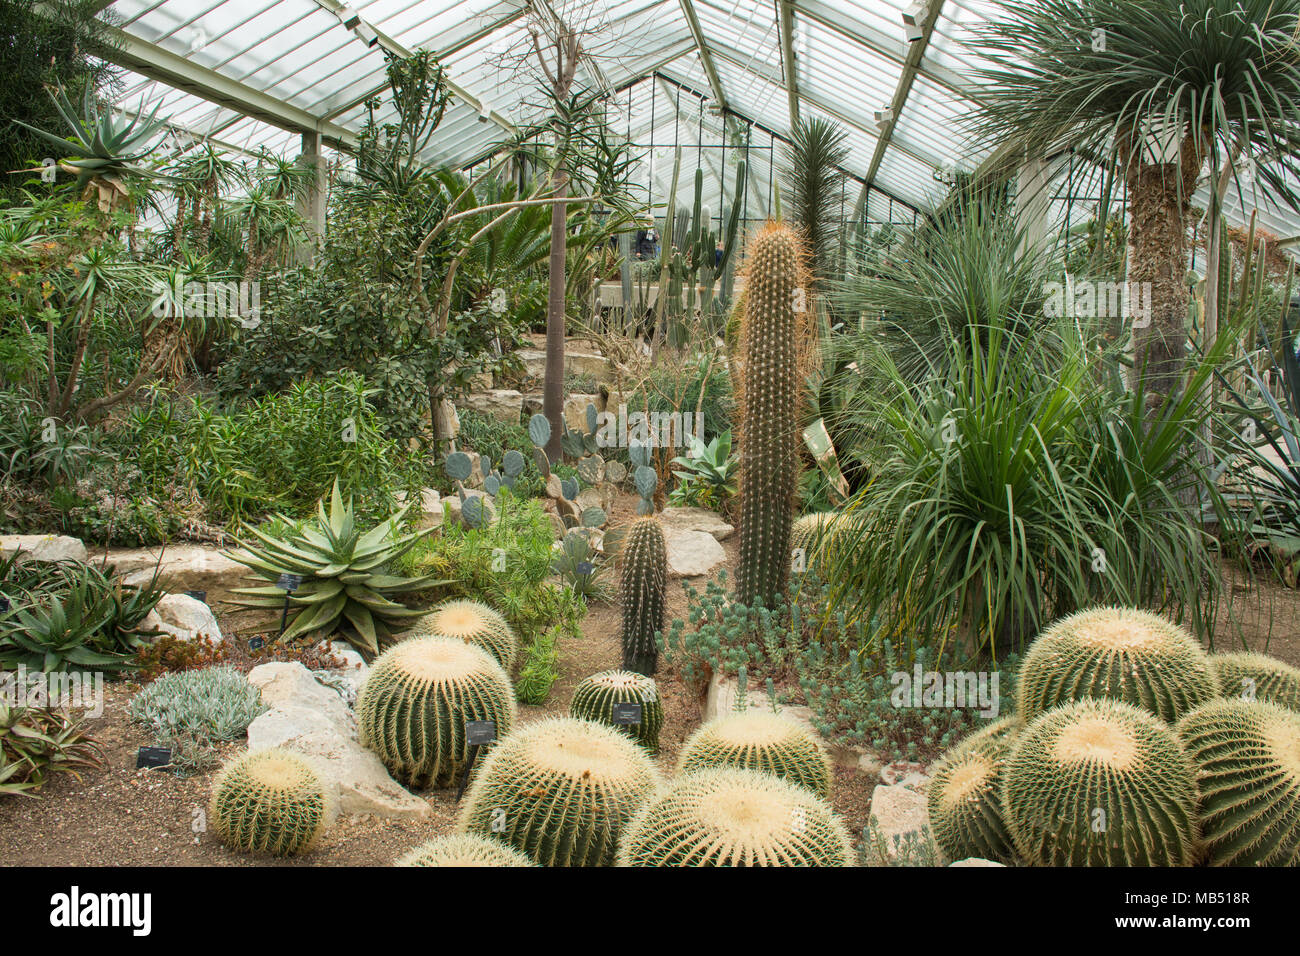 Display of cacti in the Princess of Wales Conservatory, Royal Botanic Gardens at Kew, London, UK Stock Photo